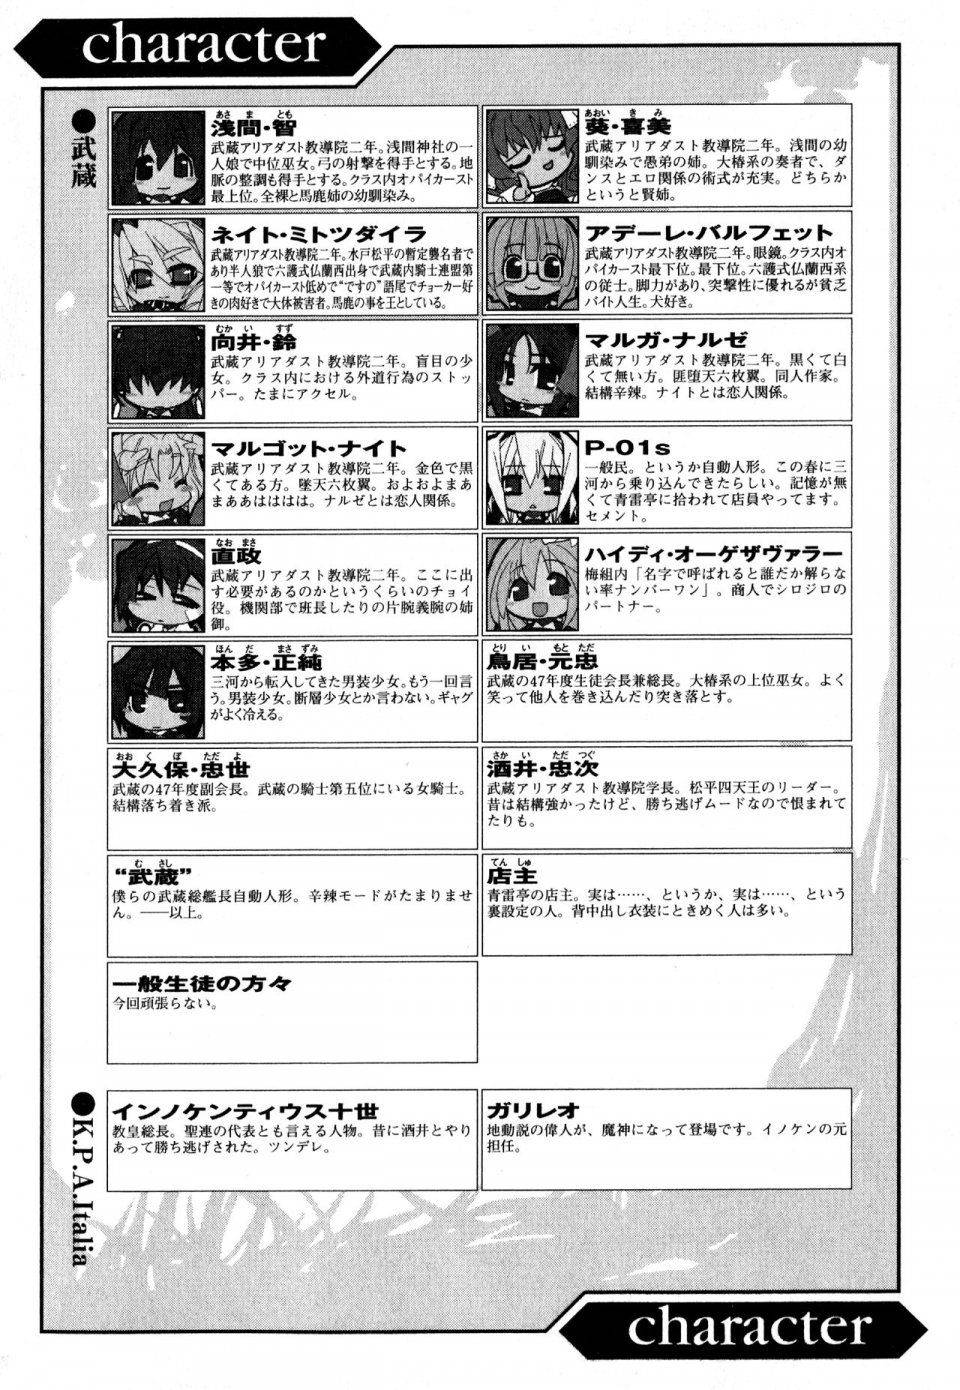 Kyoukai Senjou no Horizon BD Special Mininovel Vol 3(2A) - Photo #8